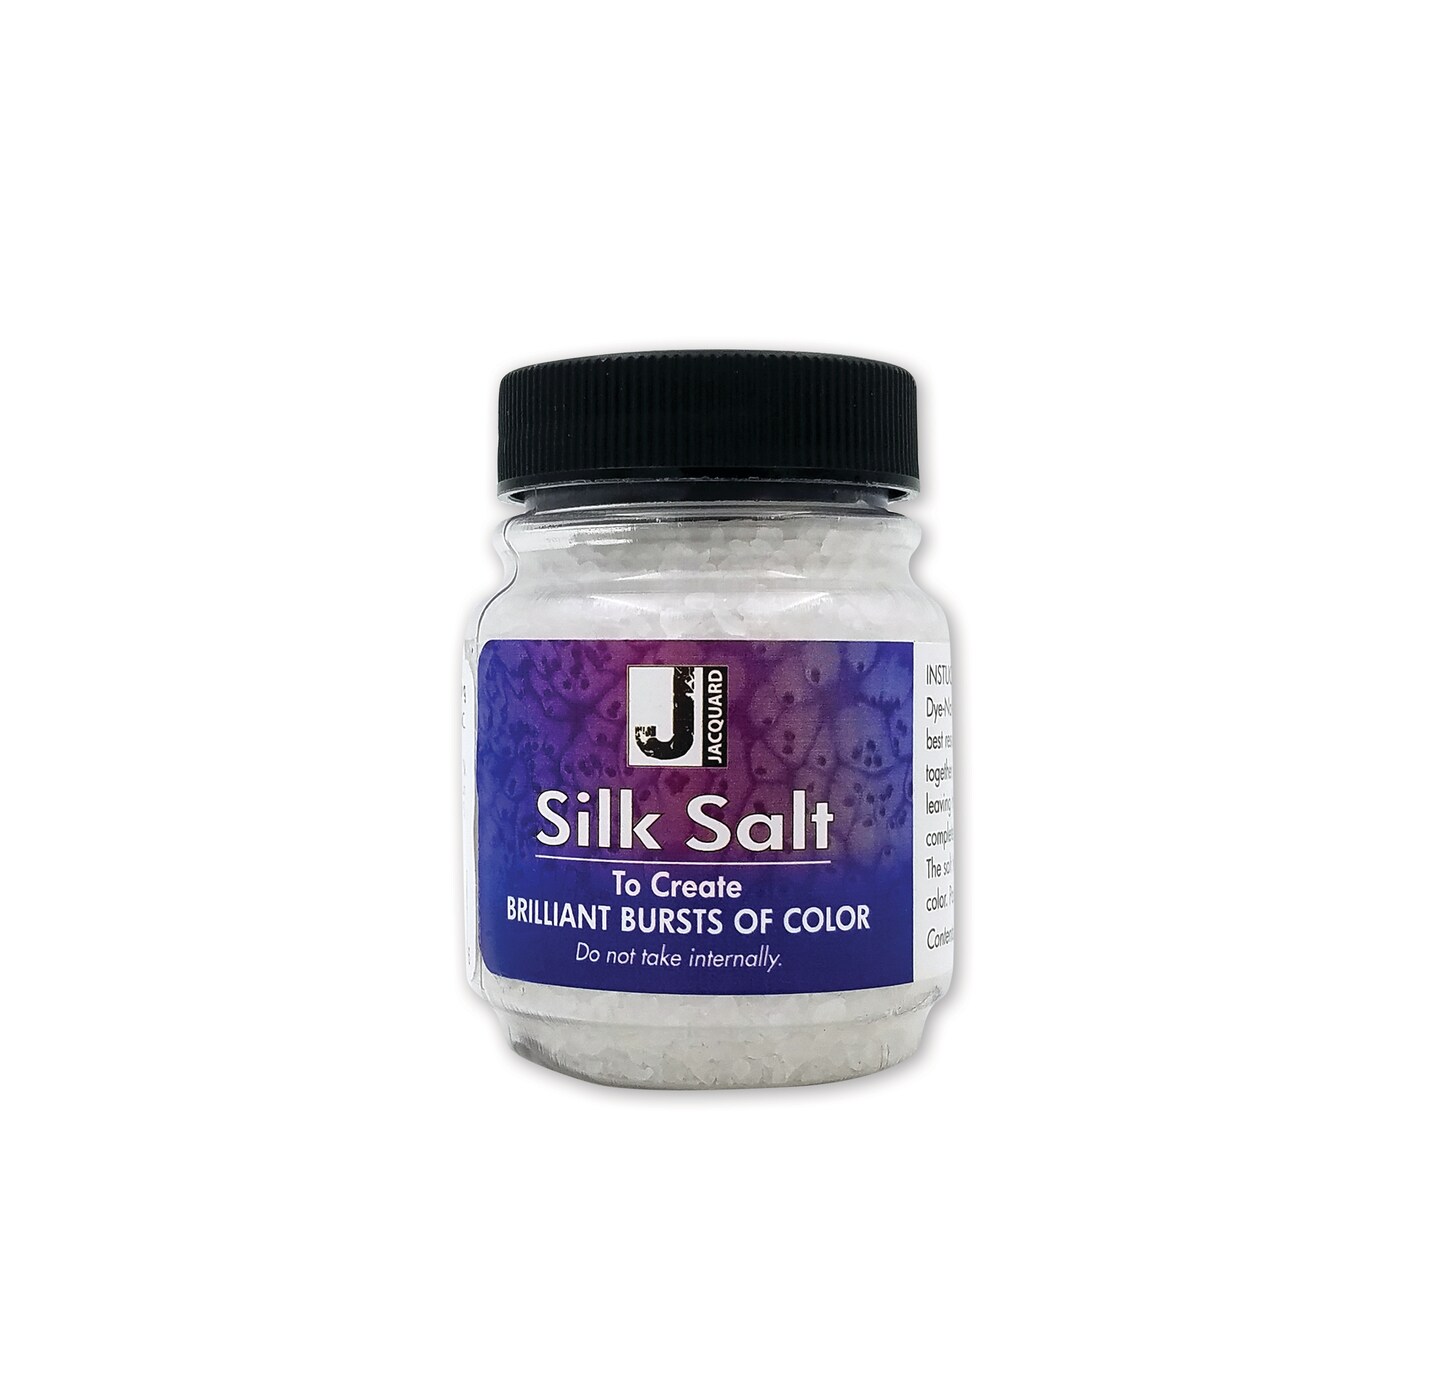 Jacquard Silk Salt, 2 oz.